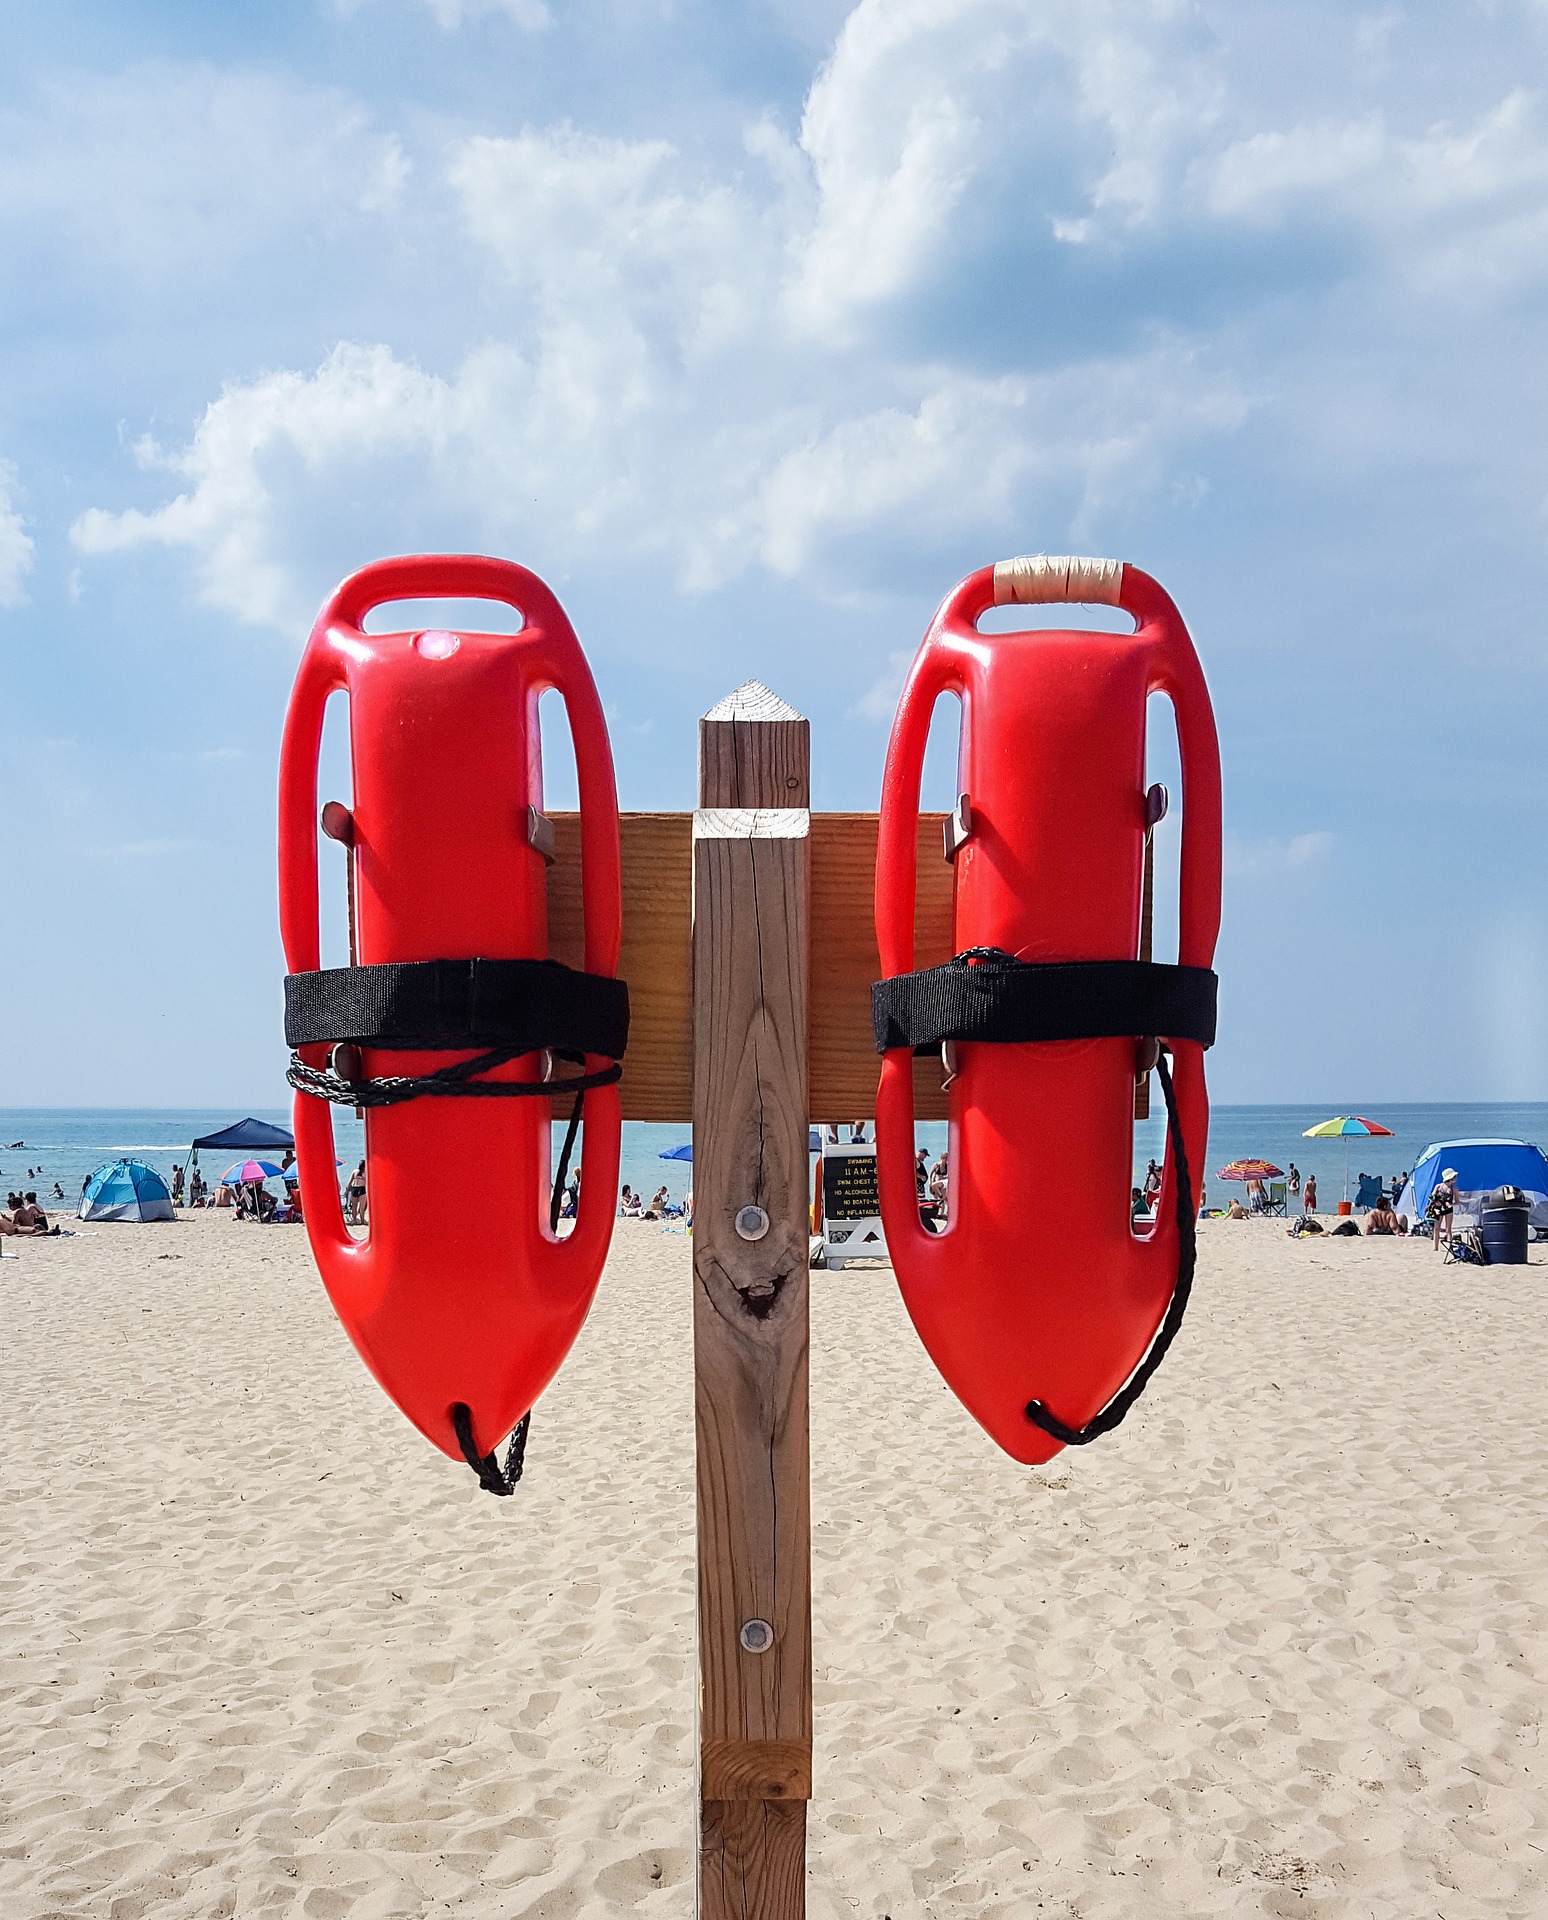 Lifeguard-Buoy